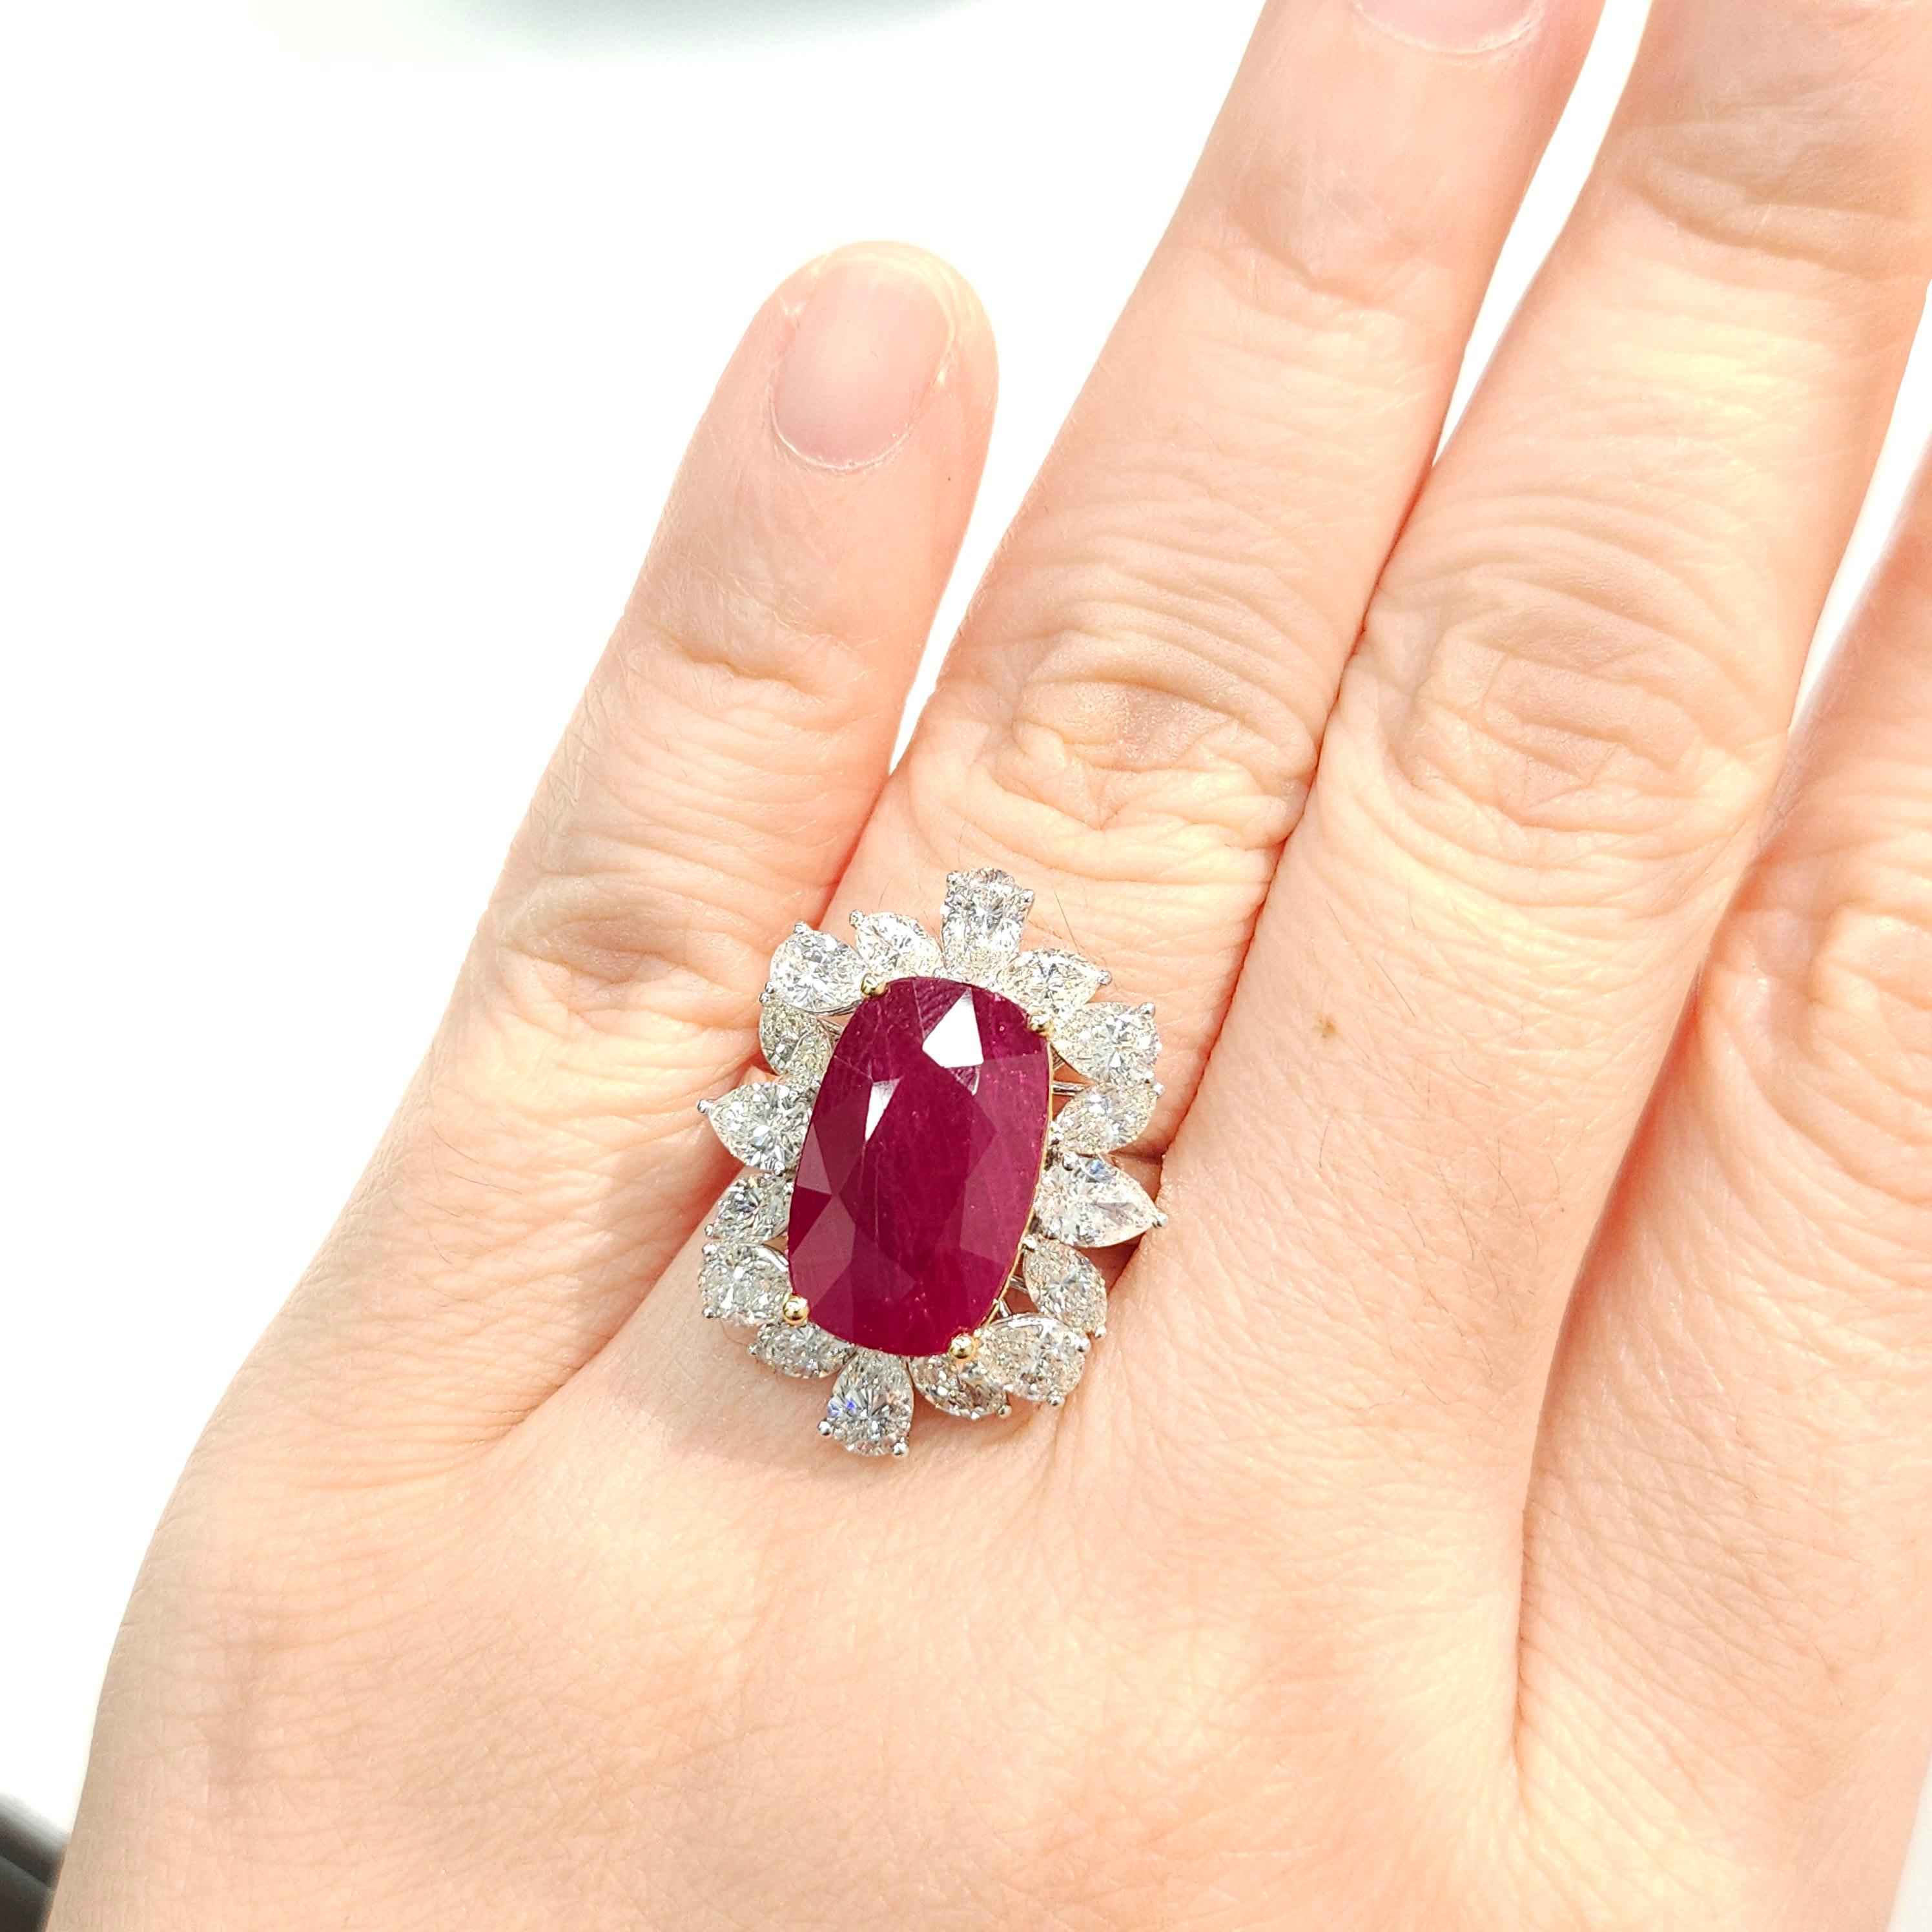 IGI Certified 8.75 Carat Ruby & 3.14 Carat Diamond Ring in 18K White Gold For Sale 10